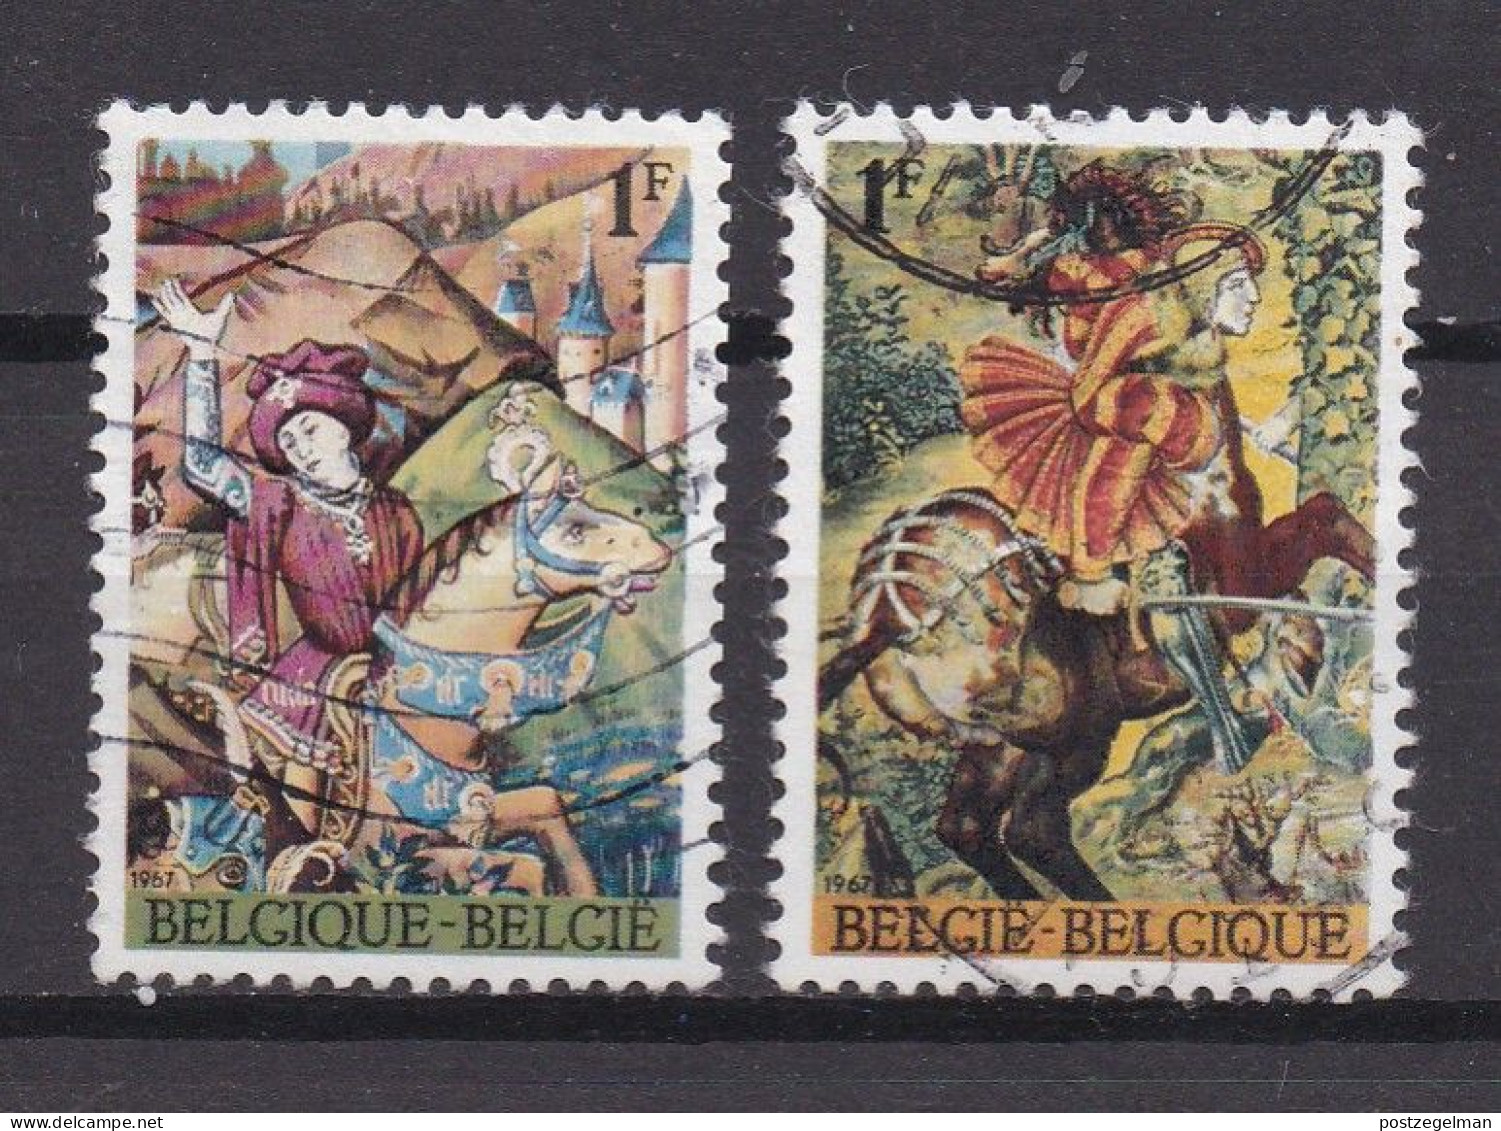 BELGIUM,1967, Used Stamp(s), Lodewyk De Raet , M1482-1483 , Scan 10445, - Oblitérés